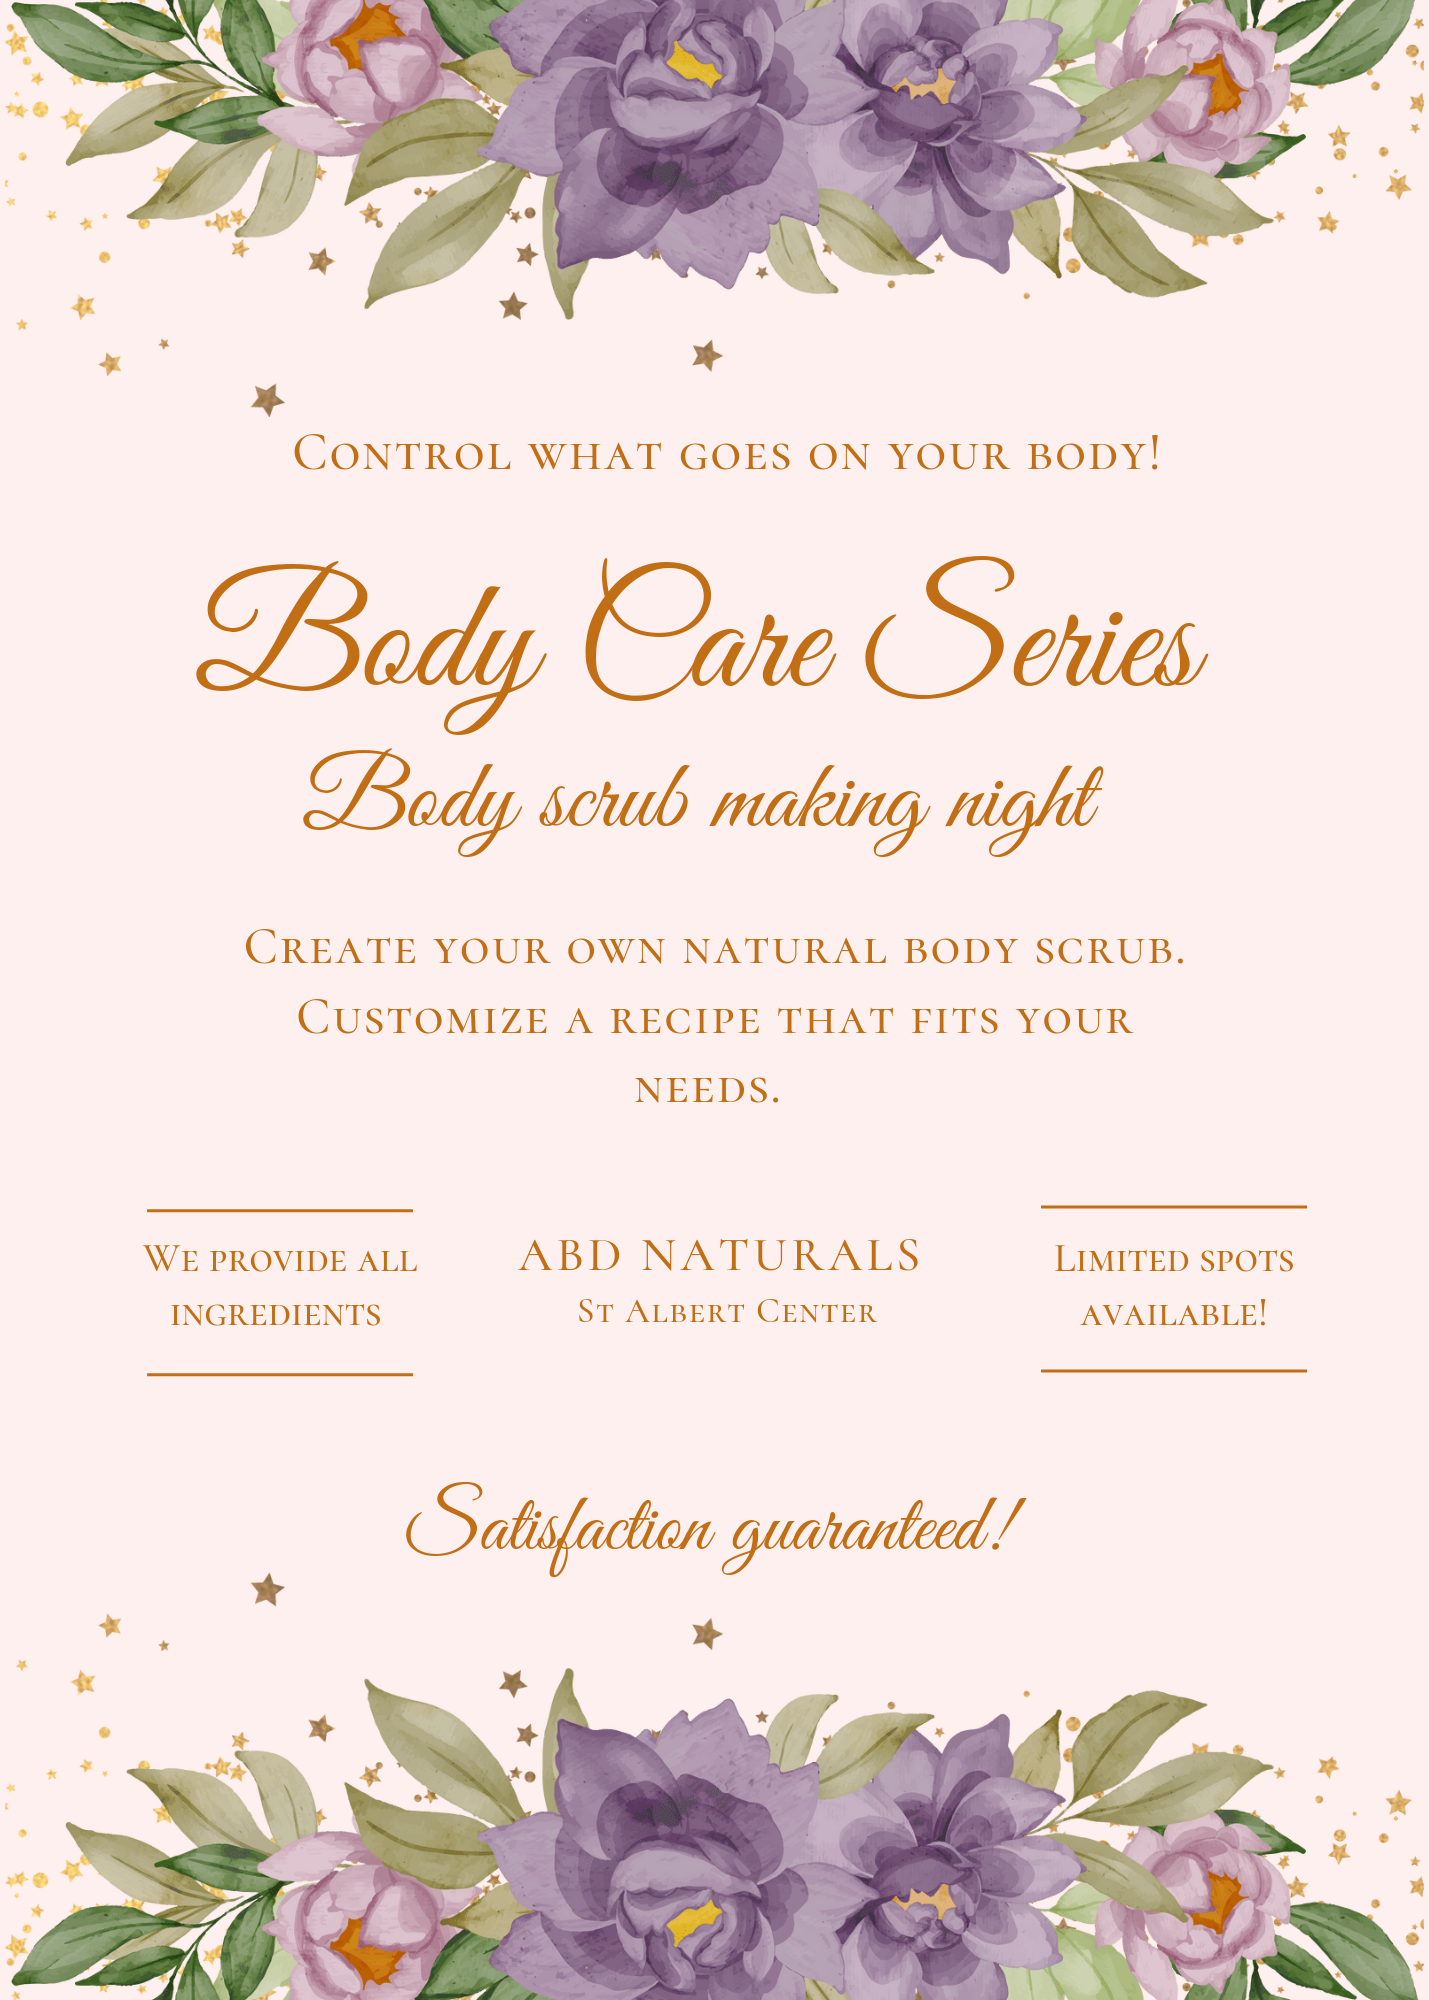 Body care series -Body Scrub- Feb 9